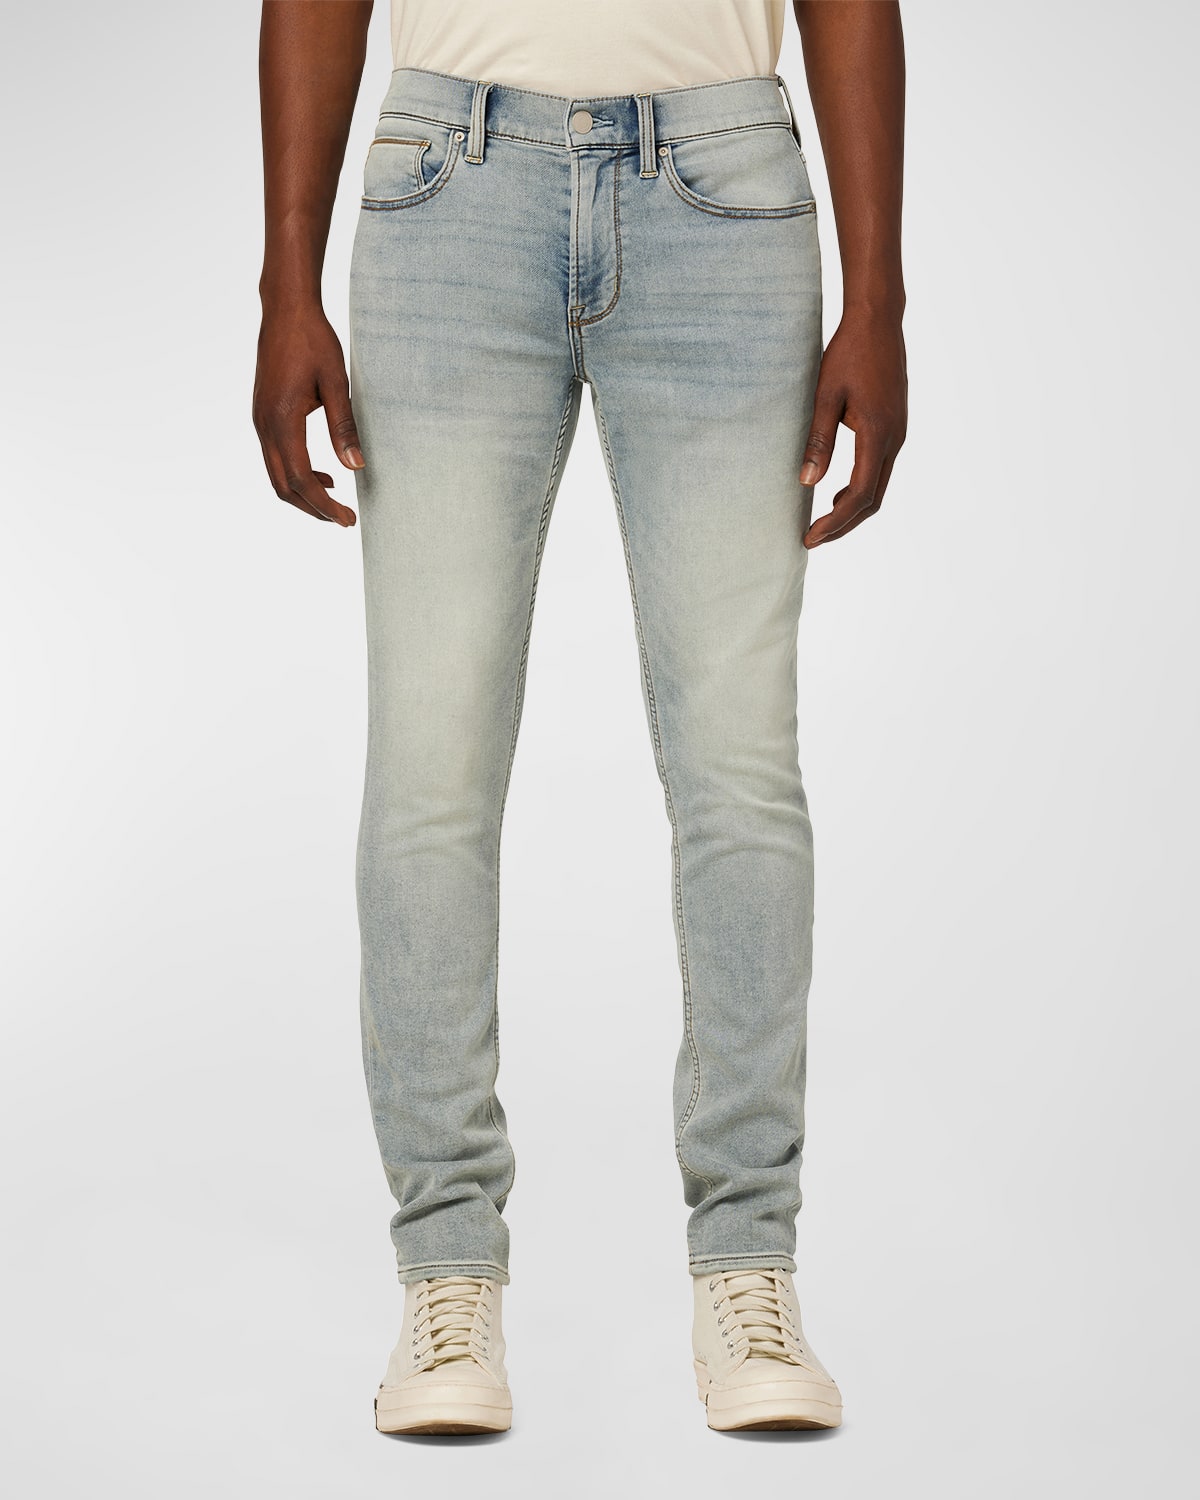 Men's Axl Slim 5-Pocket Jeans